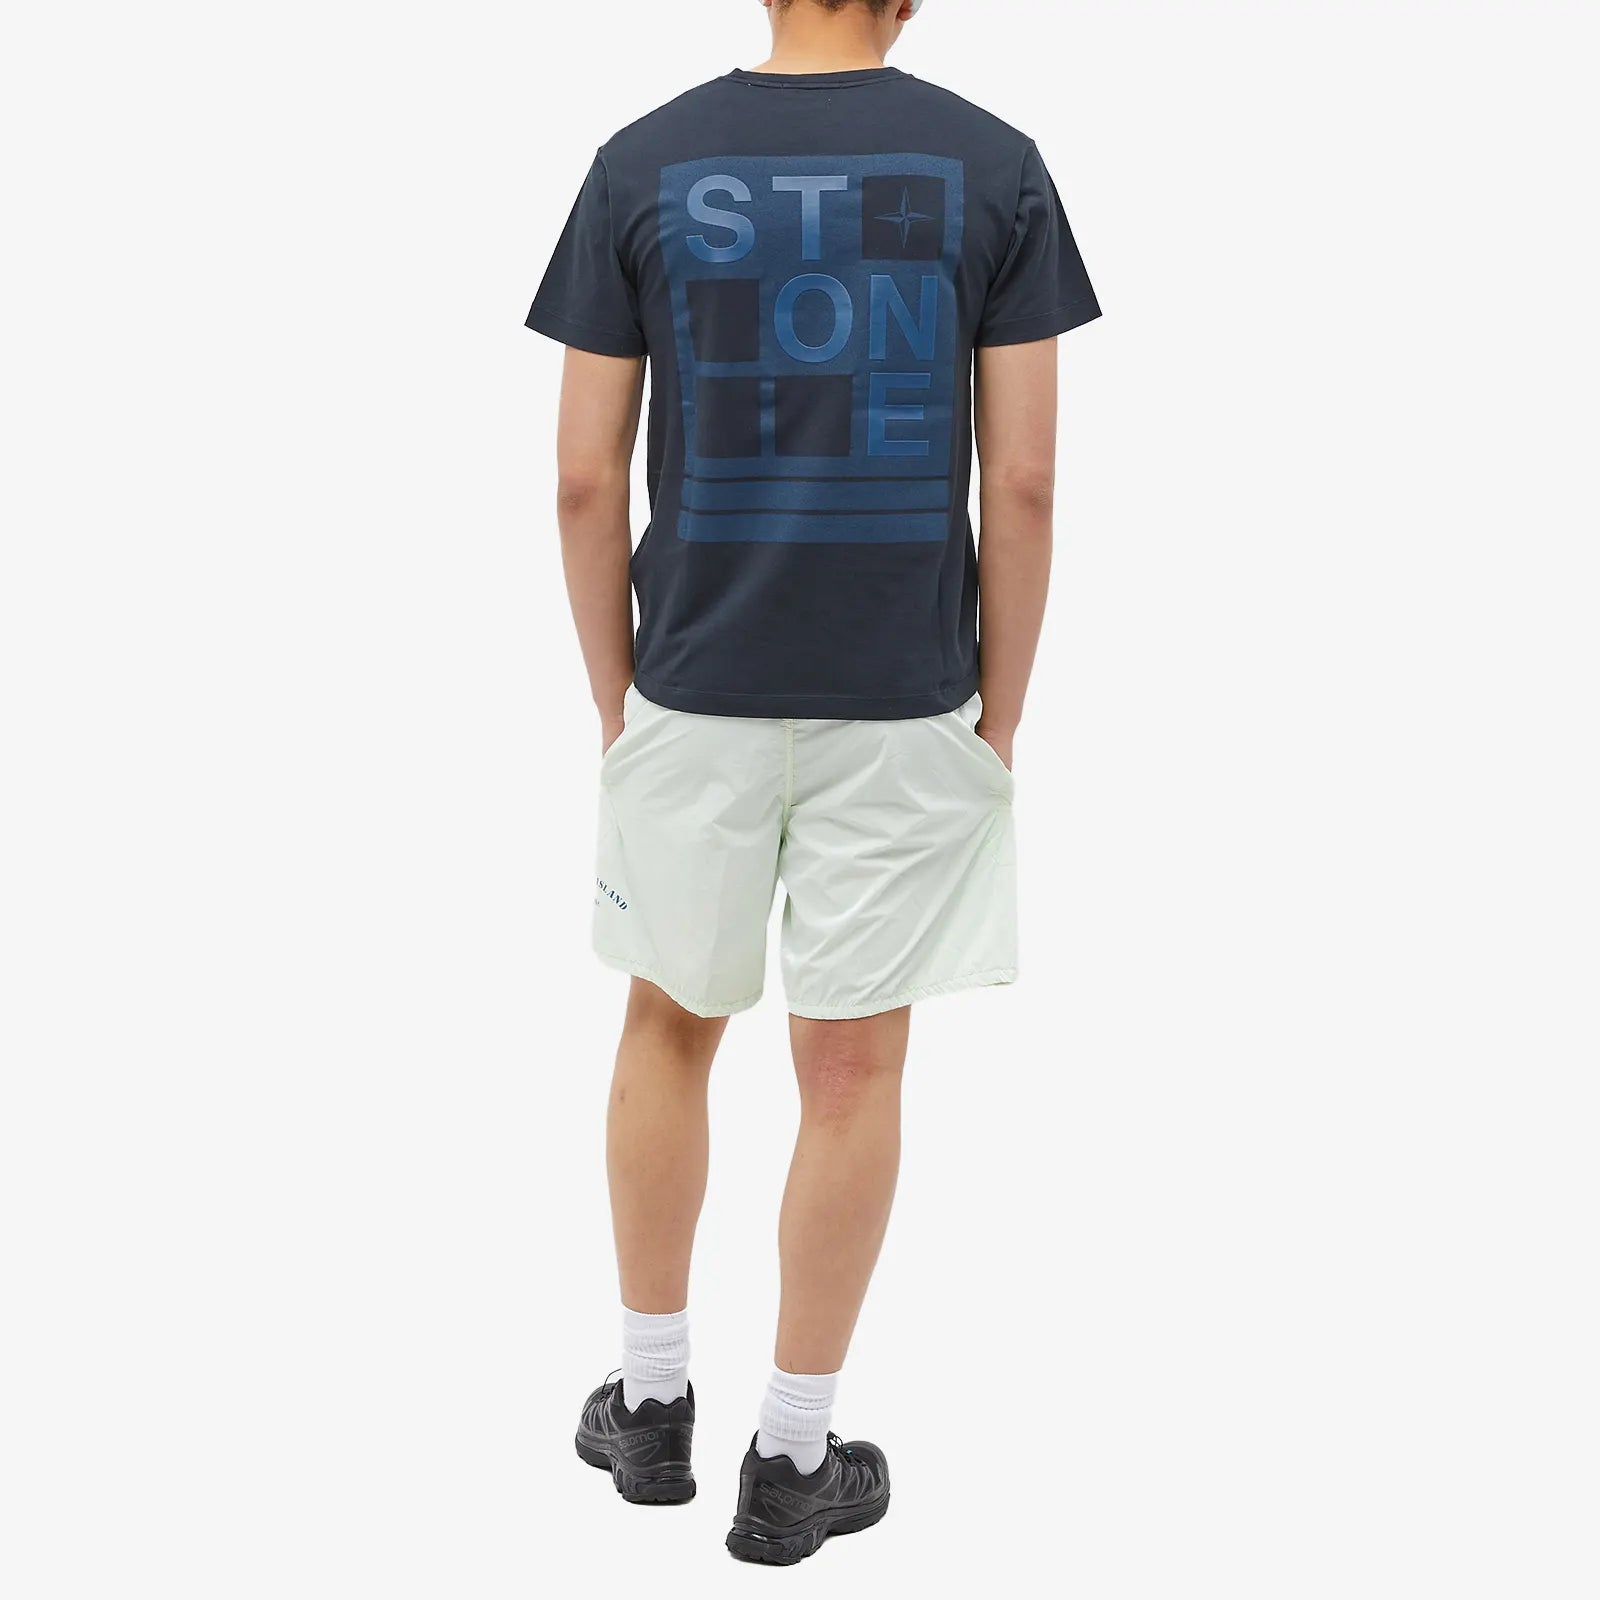 Stone Island Abbrevaiation Graphic T-Shirt - DANYOUNGUK